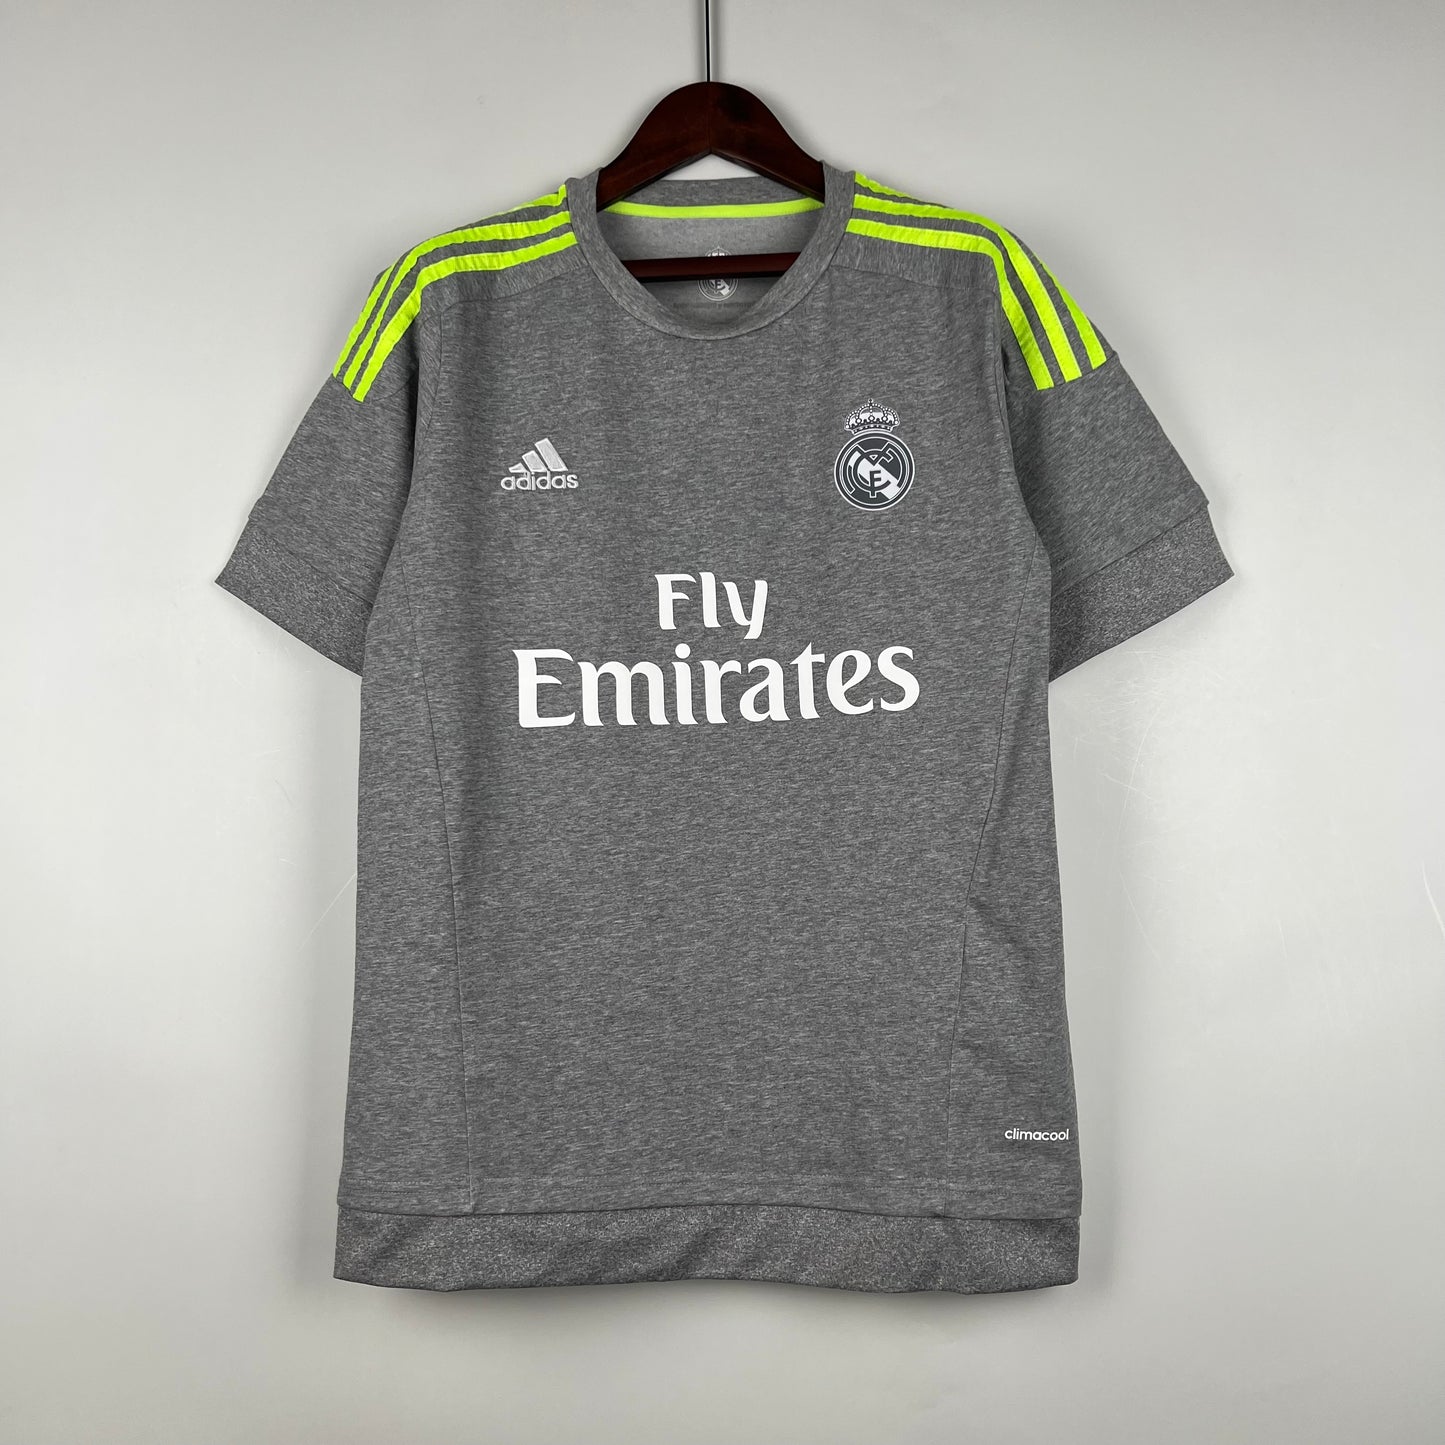 Real Madrid 2015/16 Away Shirt